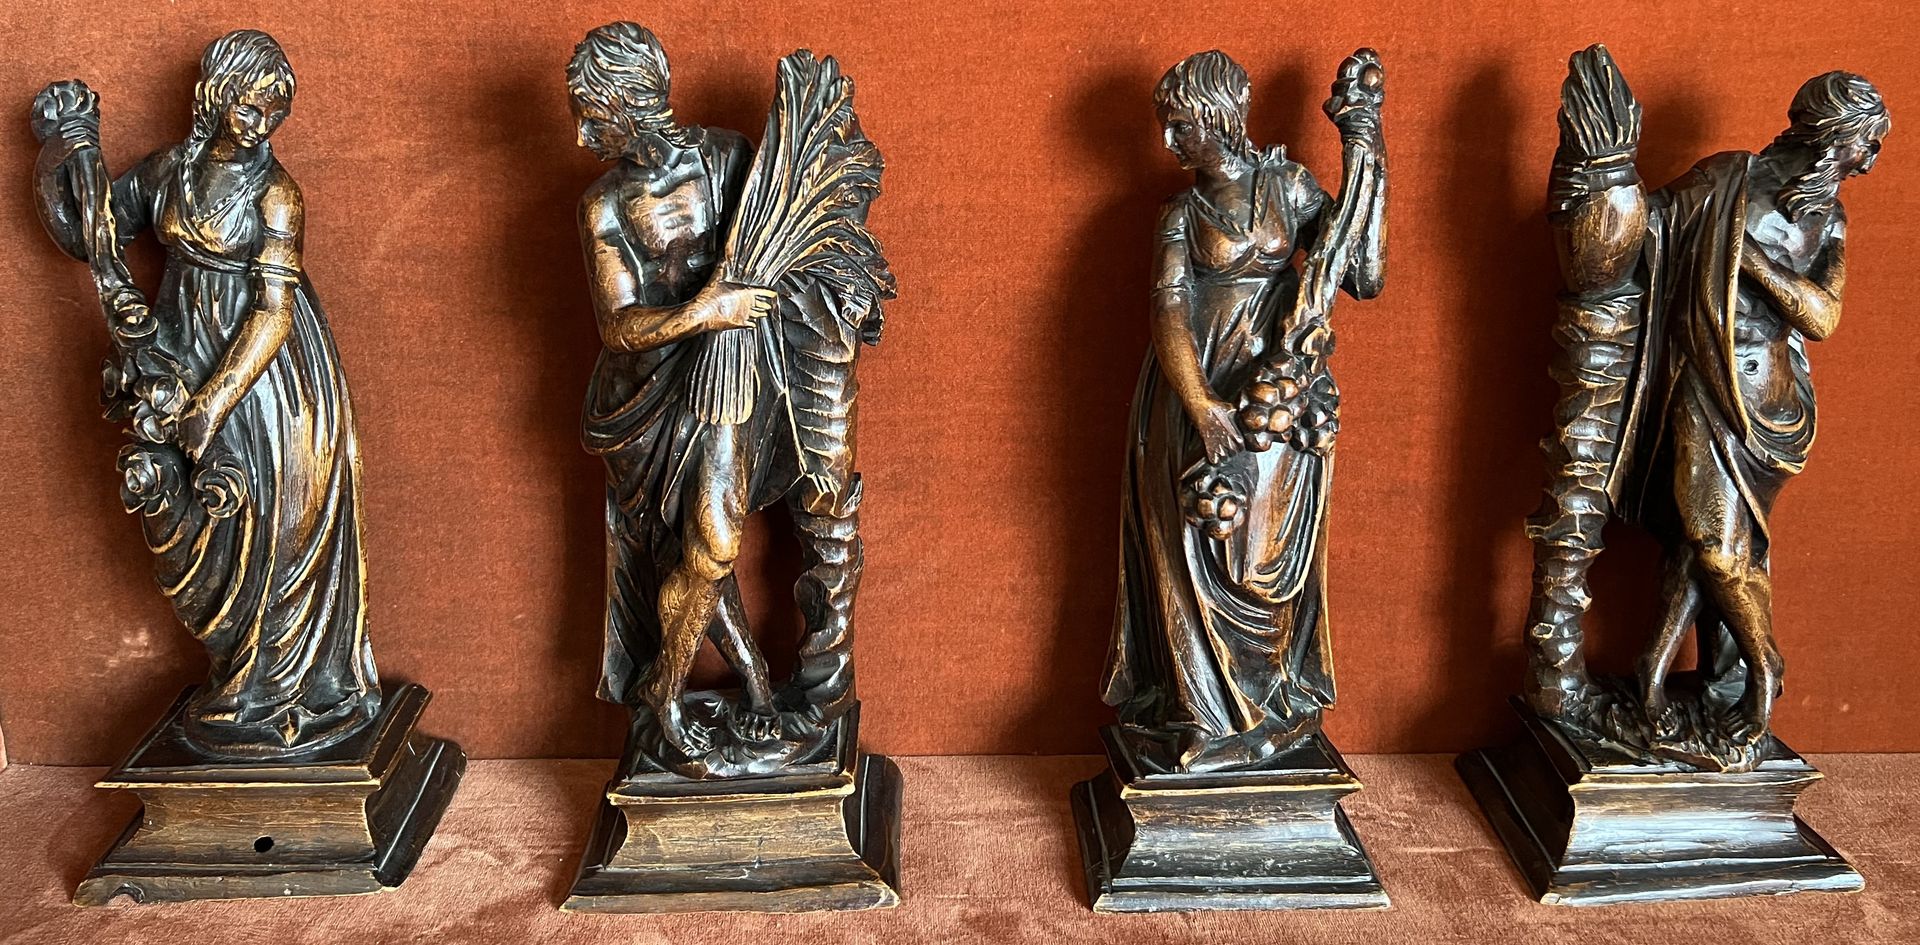 Null 代表四季的四件软木雕刻雕像套件。18世纪风格。高26厘米。